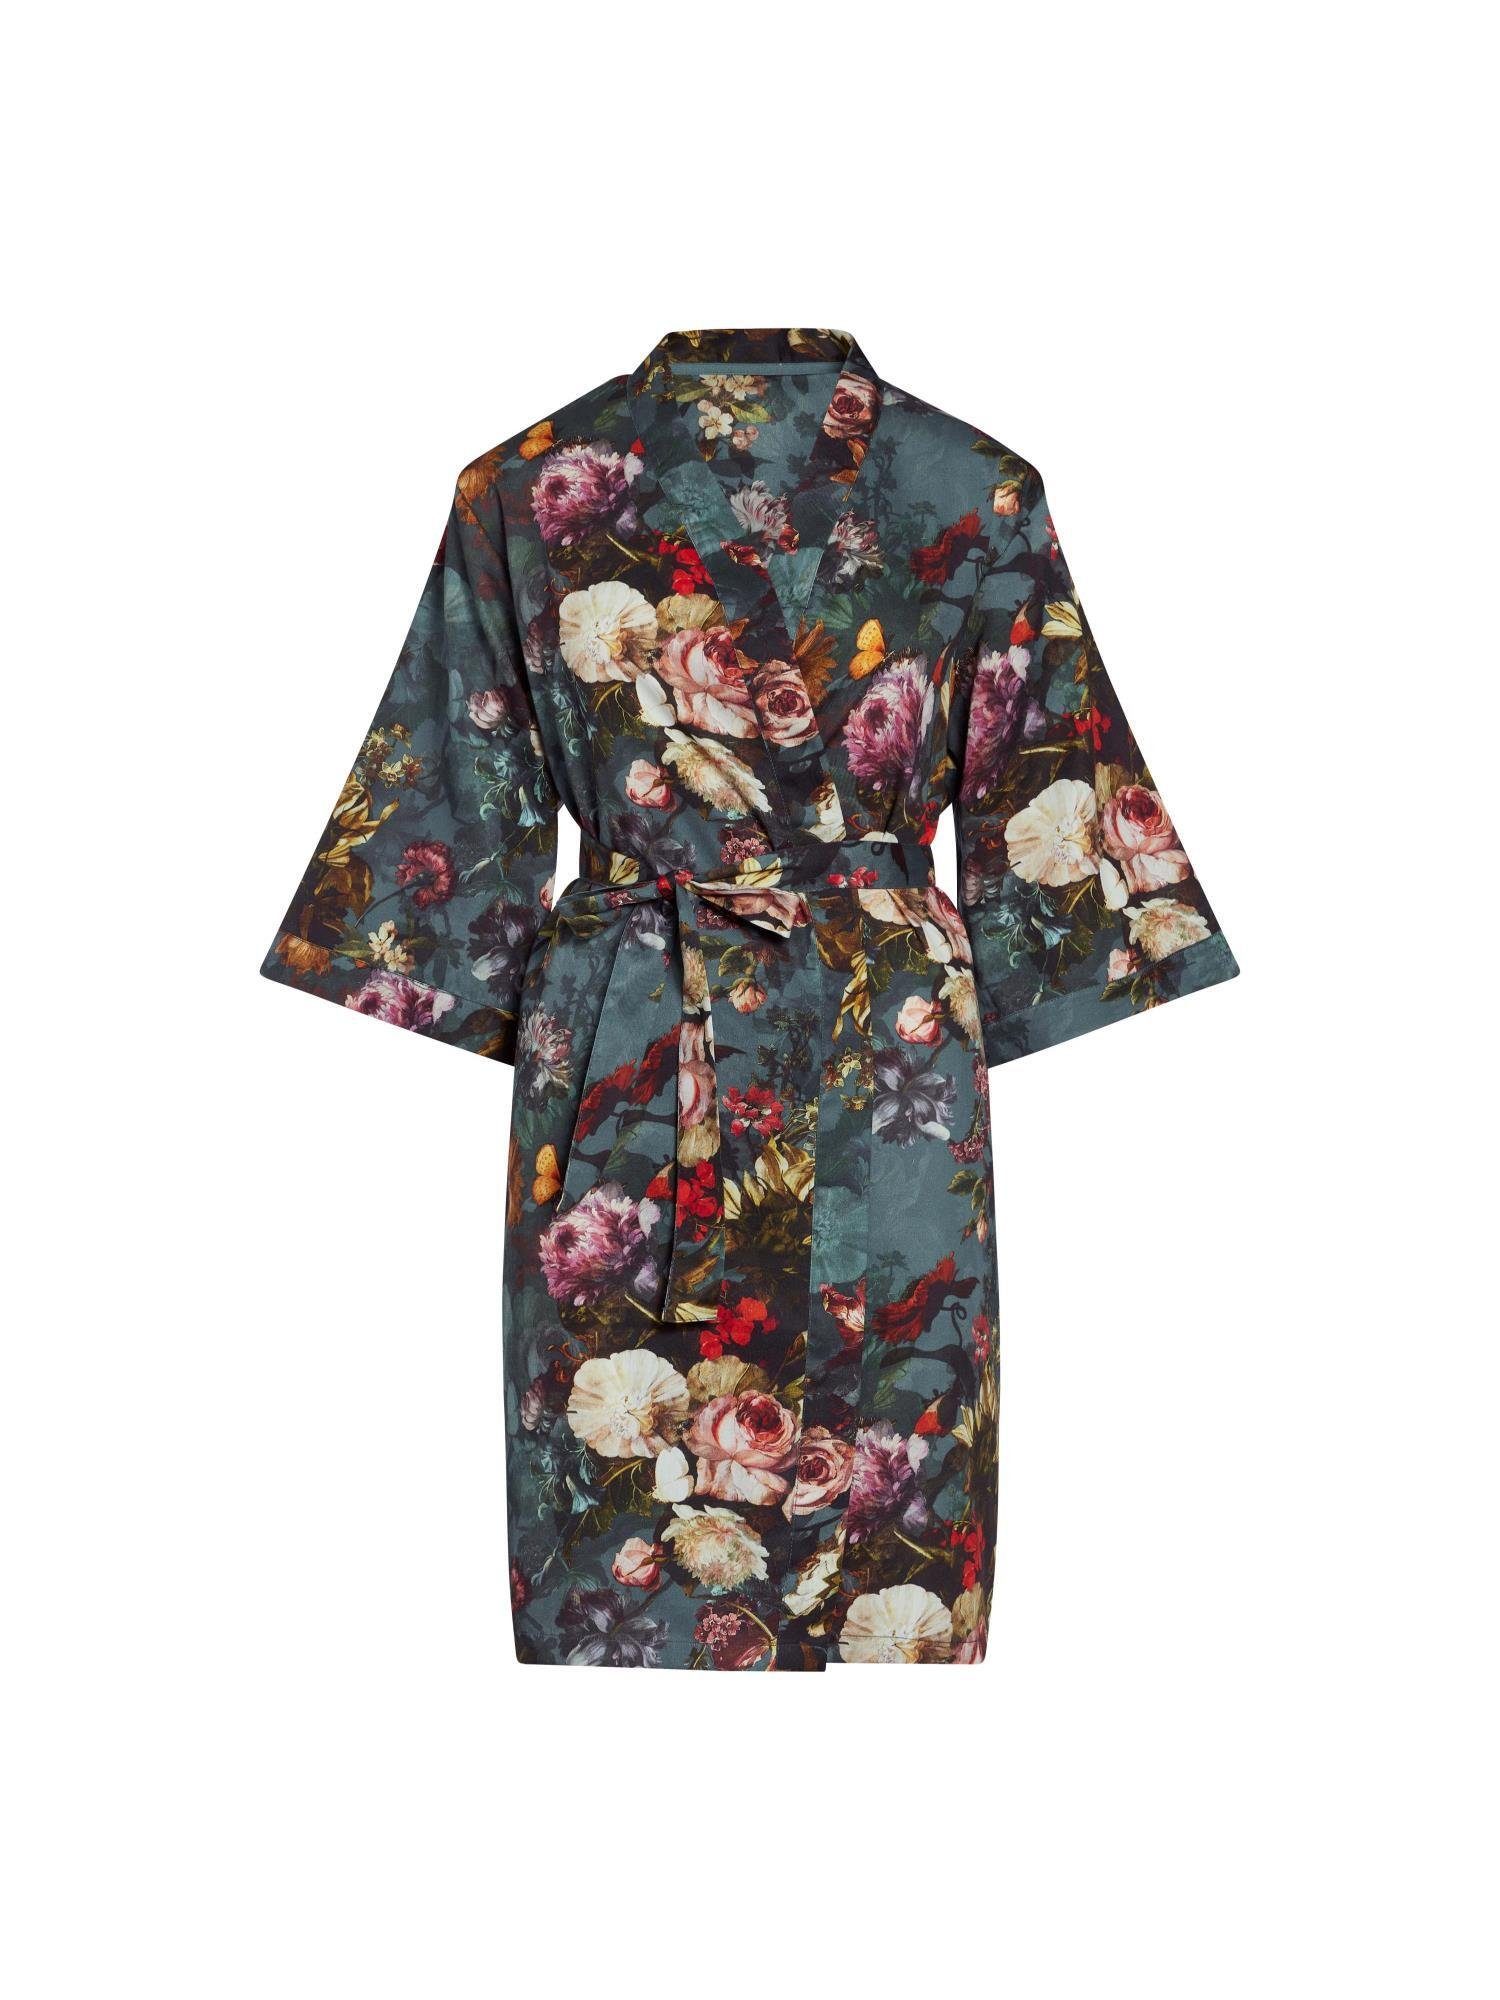 Essenza Kimono sarai karli, Kurzform, Baumwolle, Kimono-Kragen, Gürtel, mit wunderschönem Blumenprint